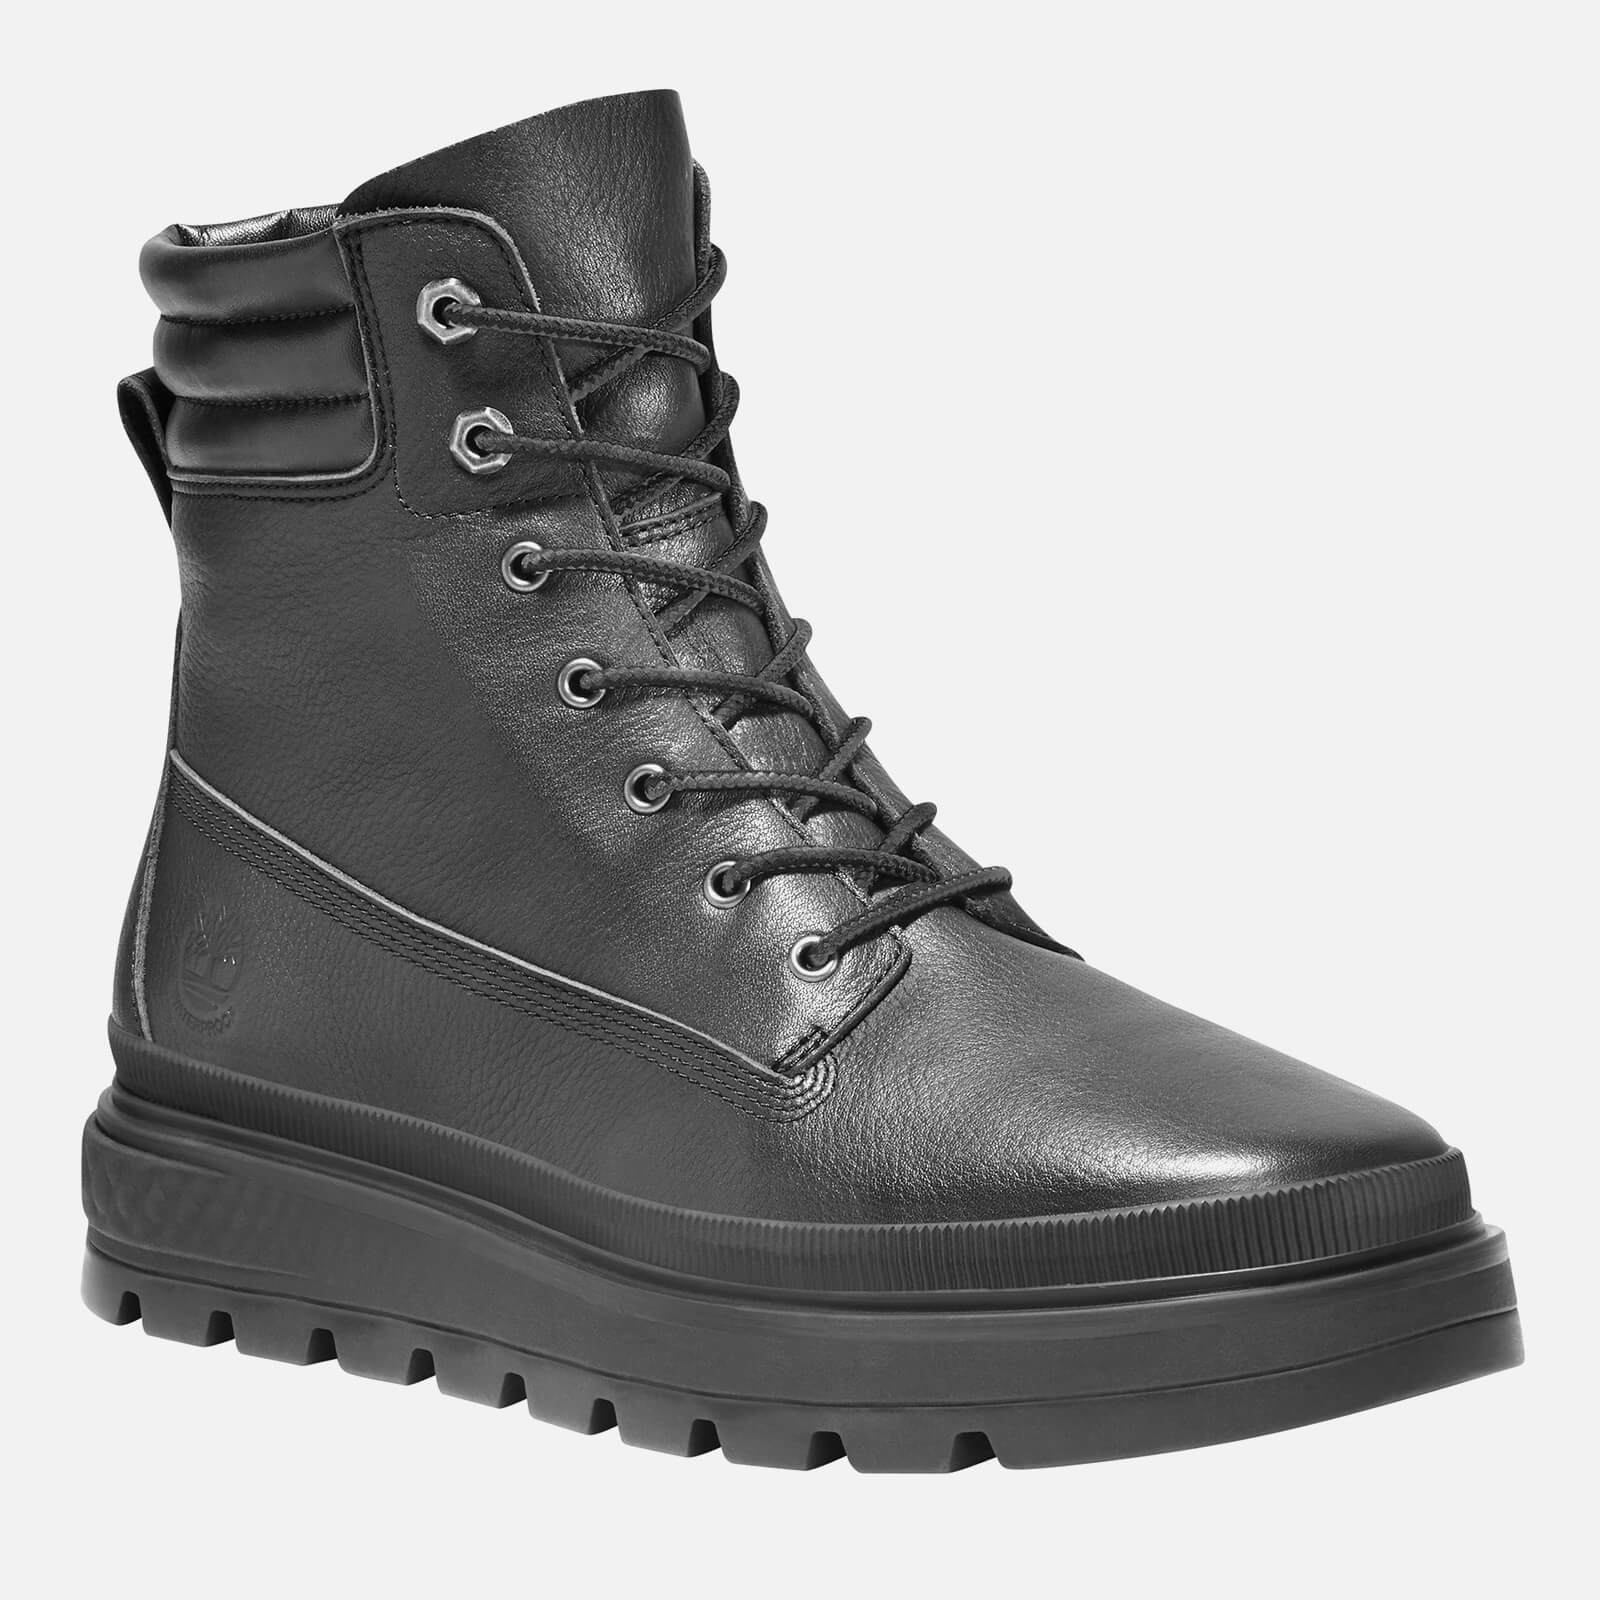 Timberland Women's Ray City 6 Inch Waterproof Leather Boots - Black - UK 3.5